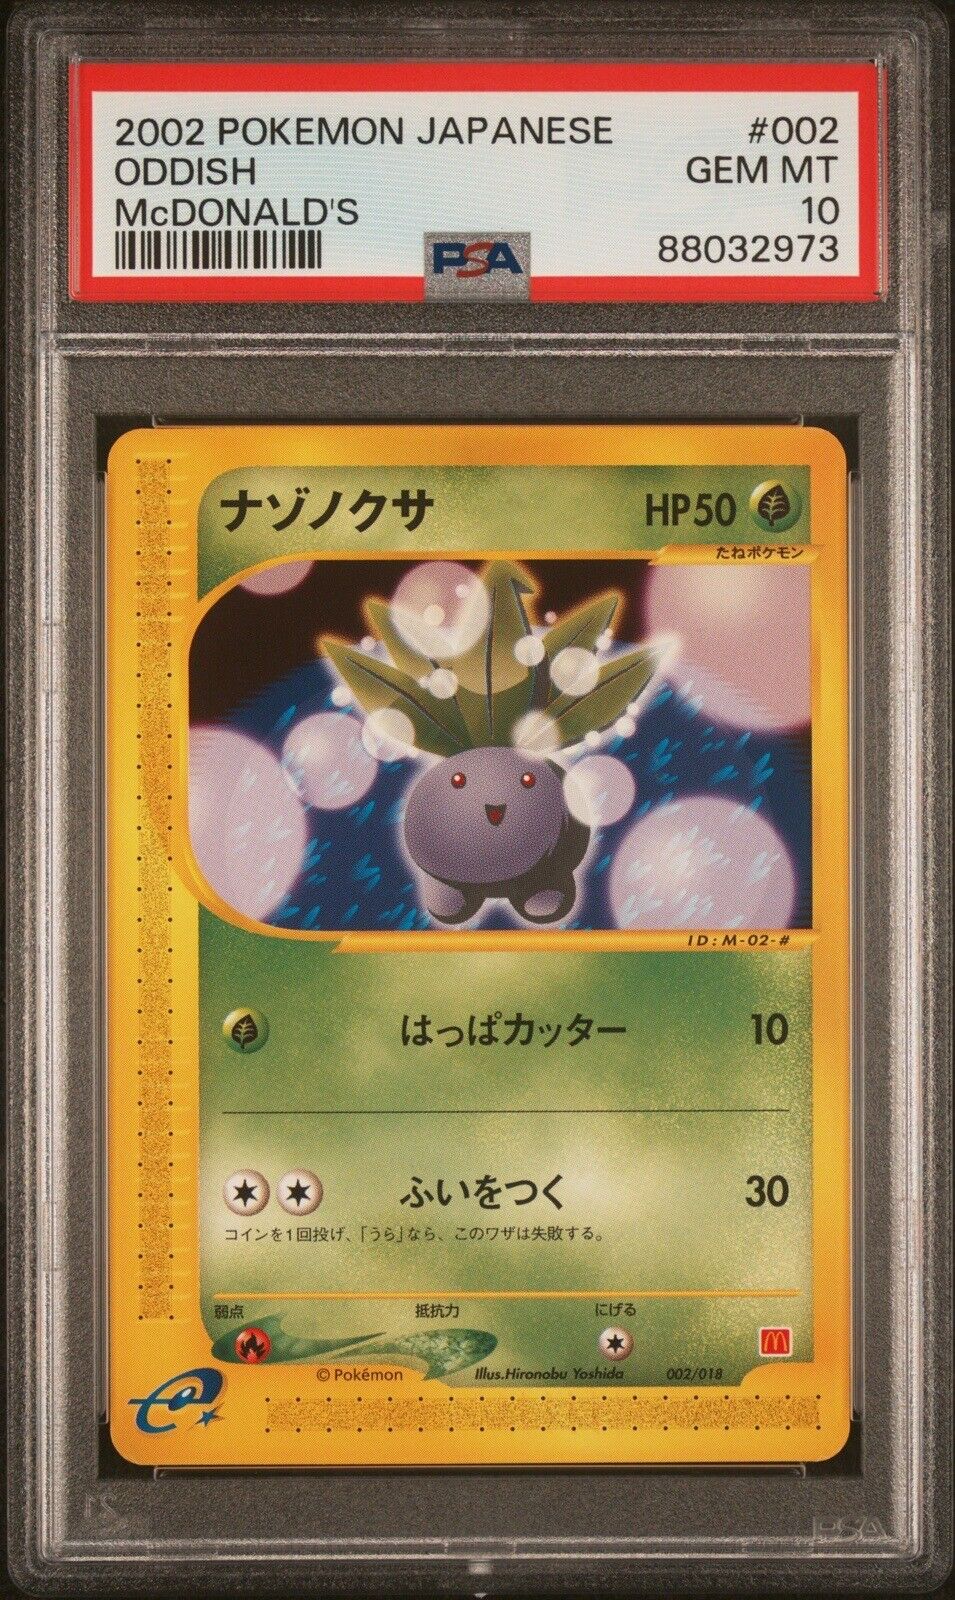 PSA 10 Oddish McDonald\'s Promo Japanese Pokemon Card 002 GEM MINT 2002